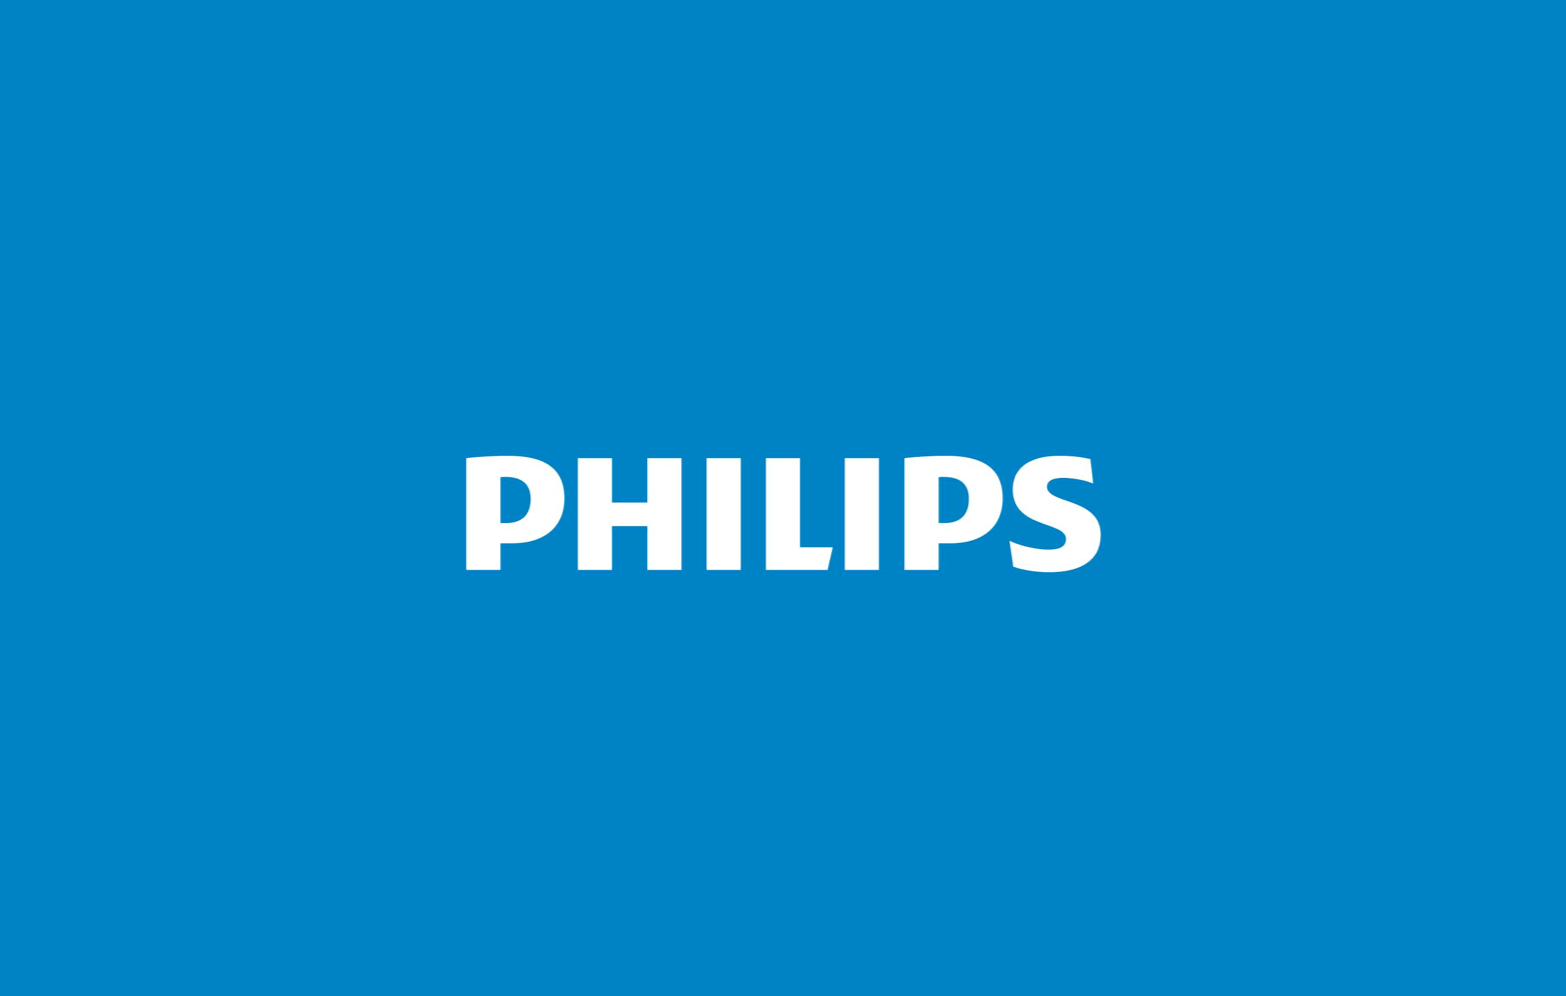 Филипс сайт интернет. Эмблема Филипс. Фирменный знак Philips. Заставка Филипс. Филипс логотип 2021.